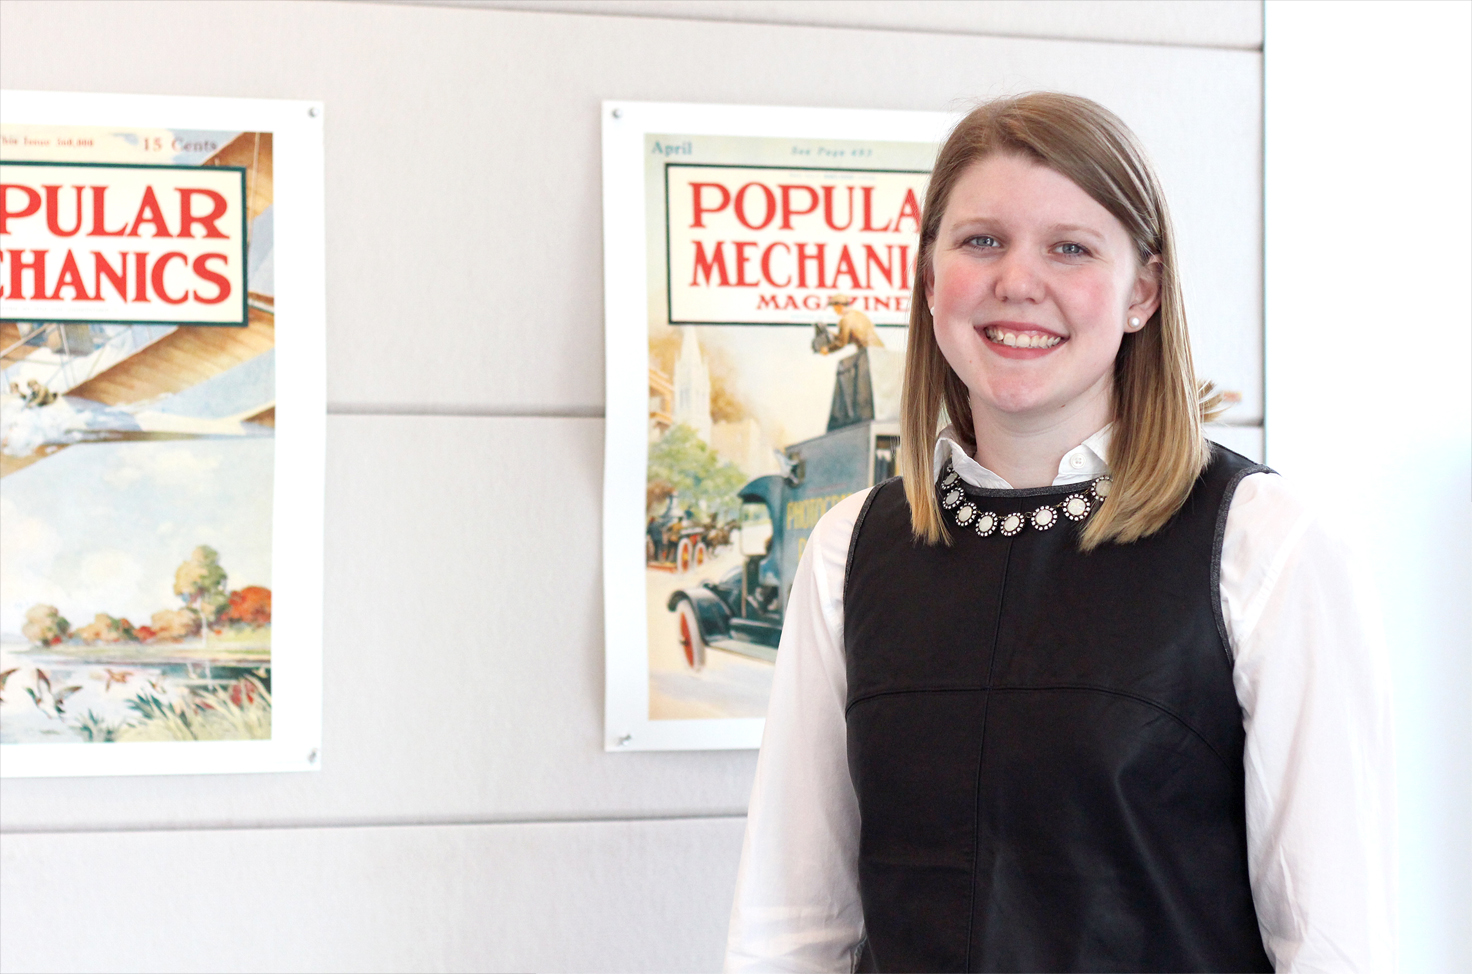 Maude Campbell: Copy Editor for Popular Mechanics